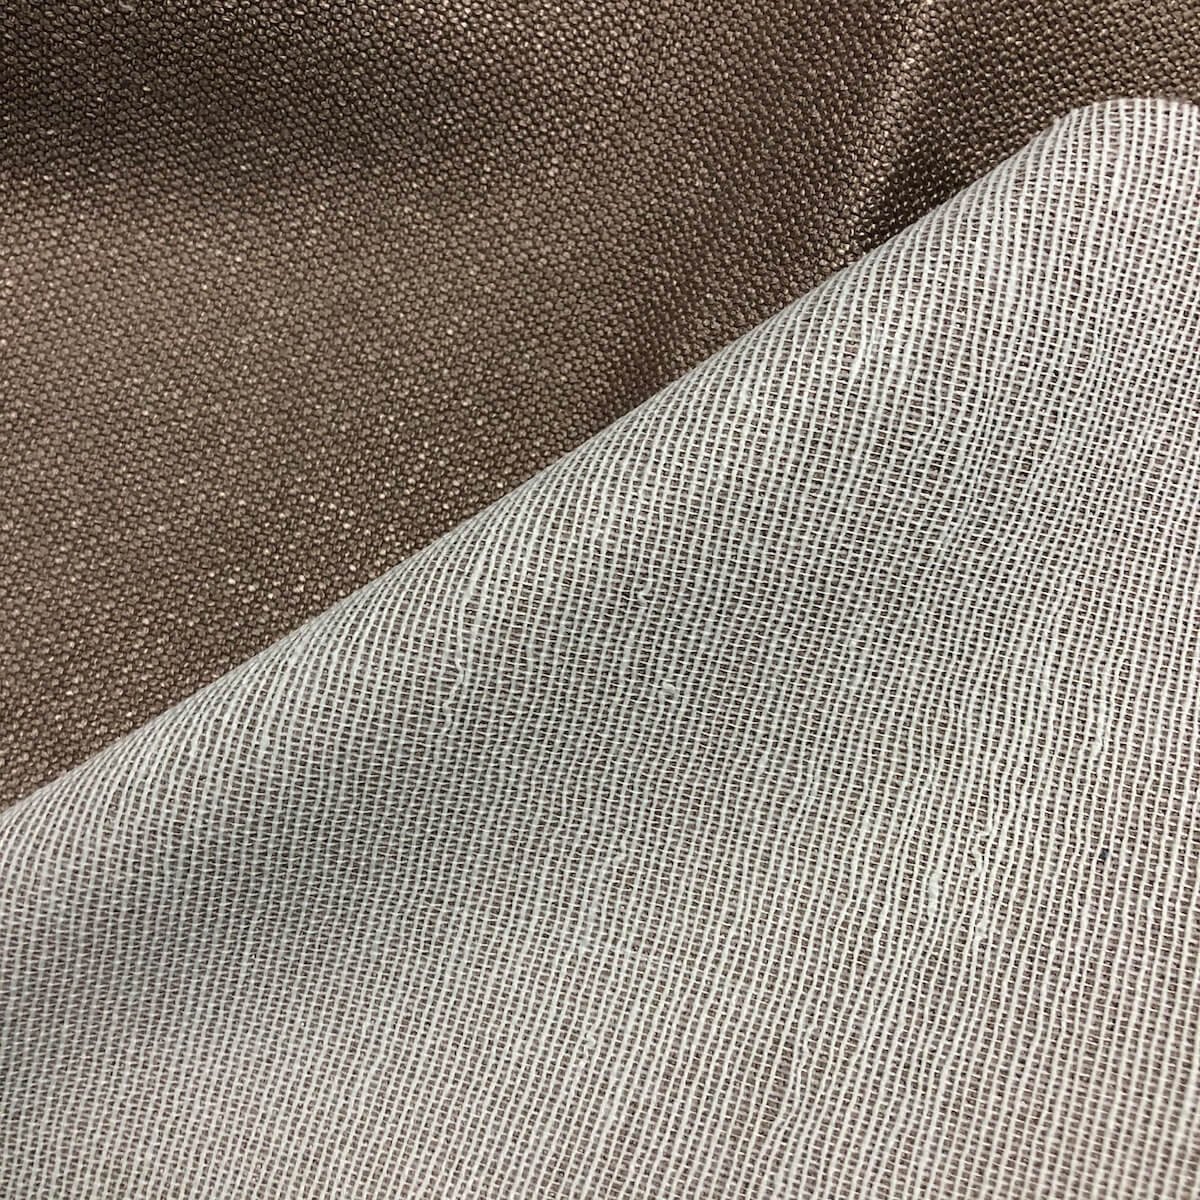 sofa fabric glossy